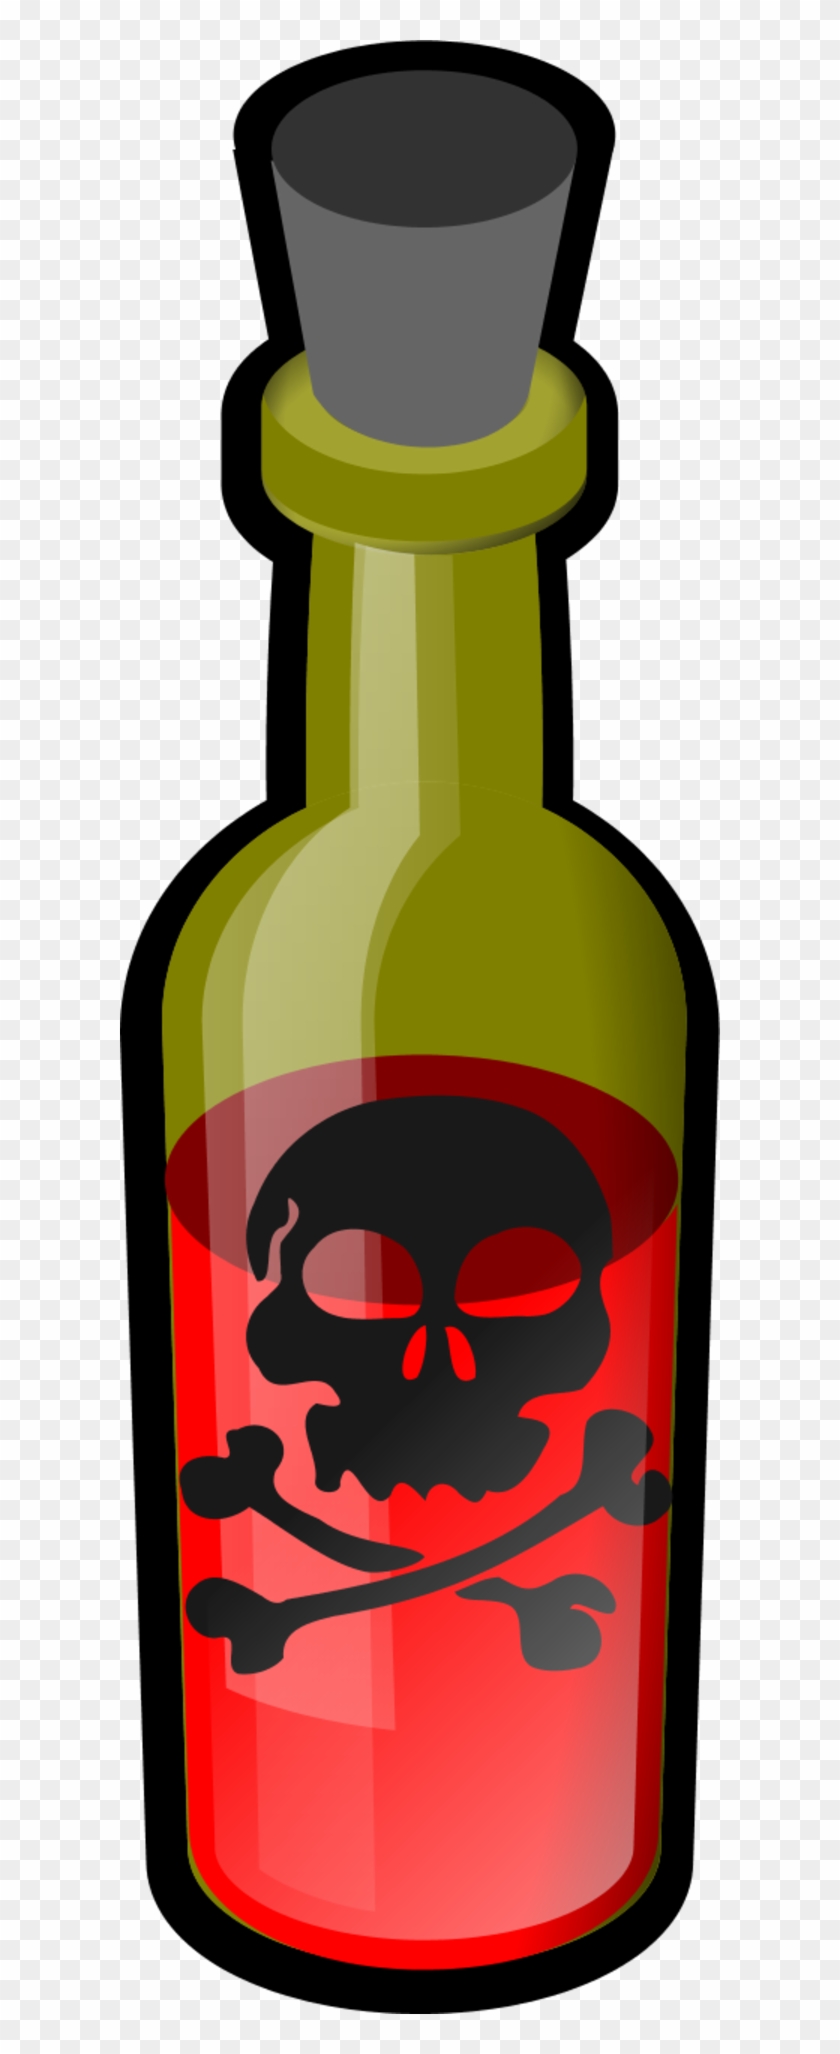 19 That Yeast Is Posionedddd - Cartoon Poison Bottle Clipart